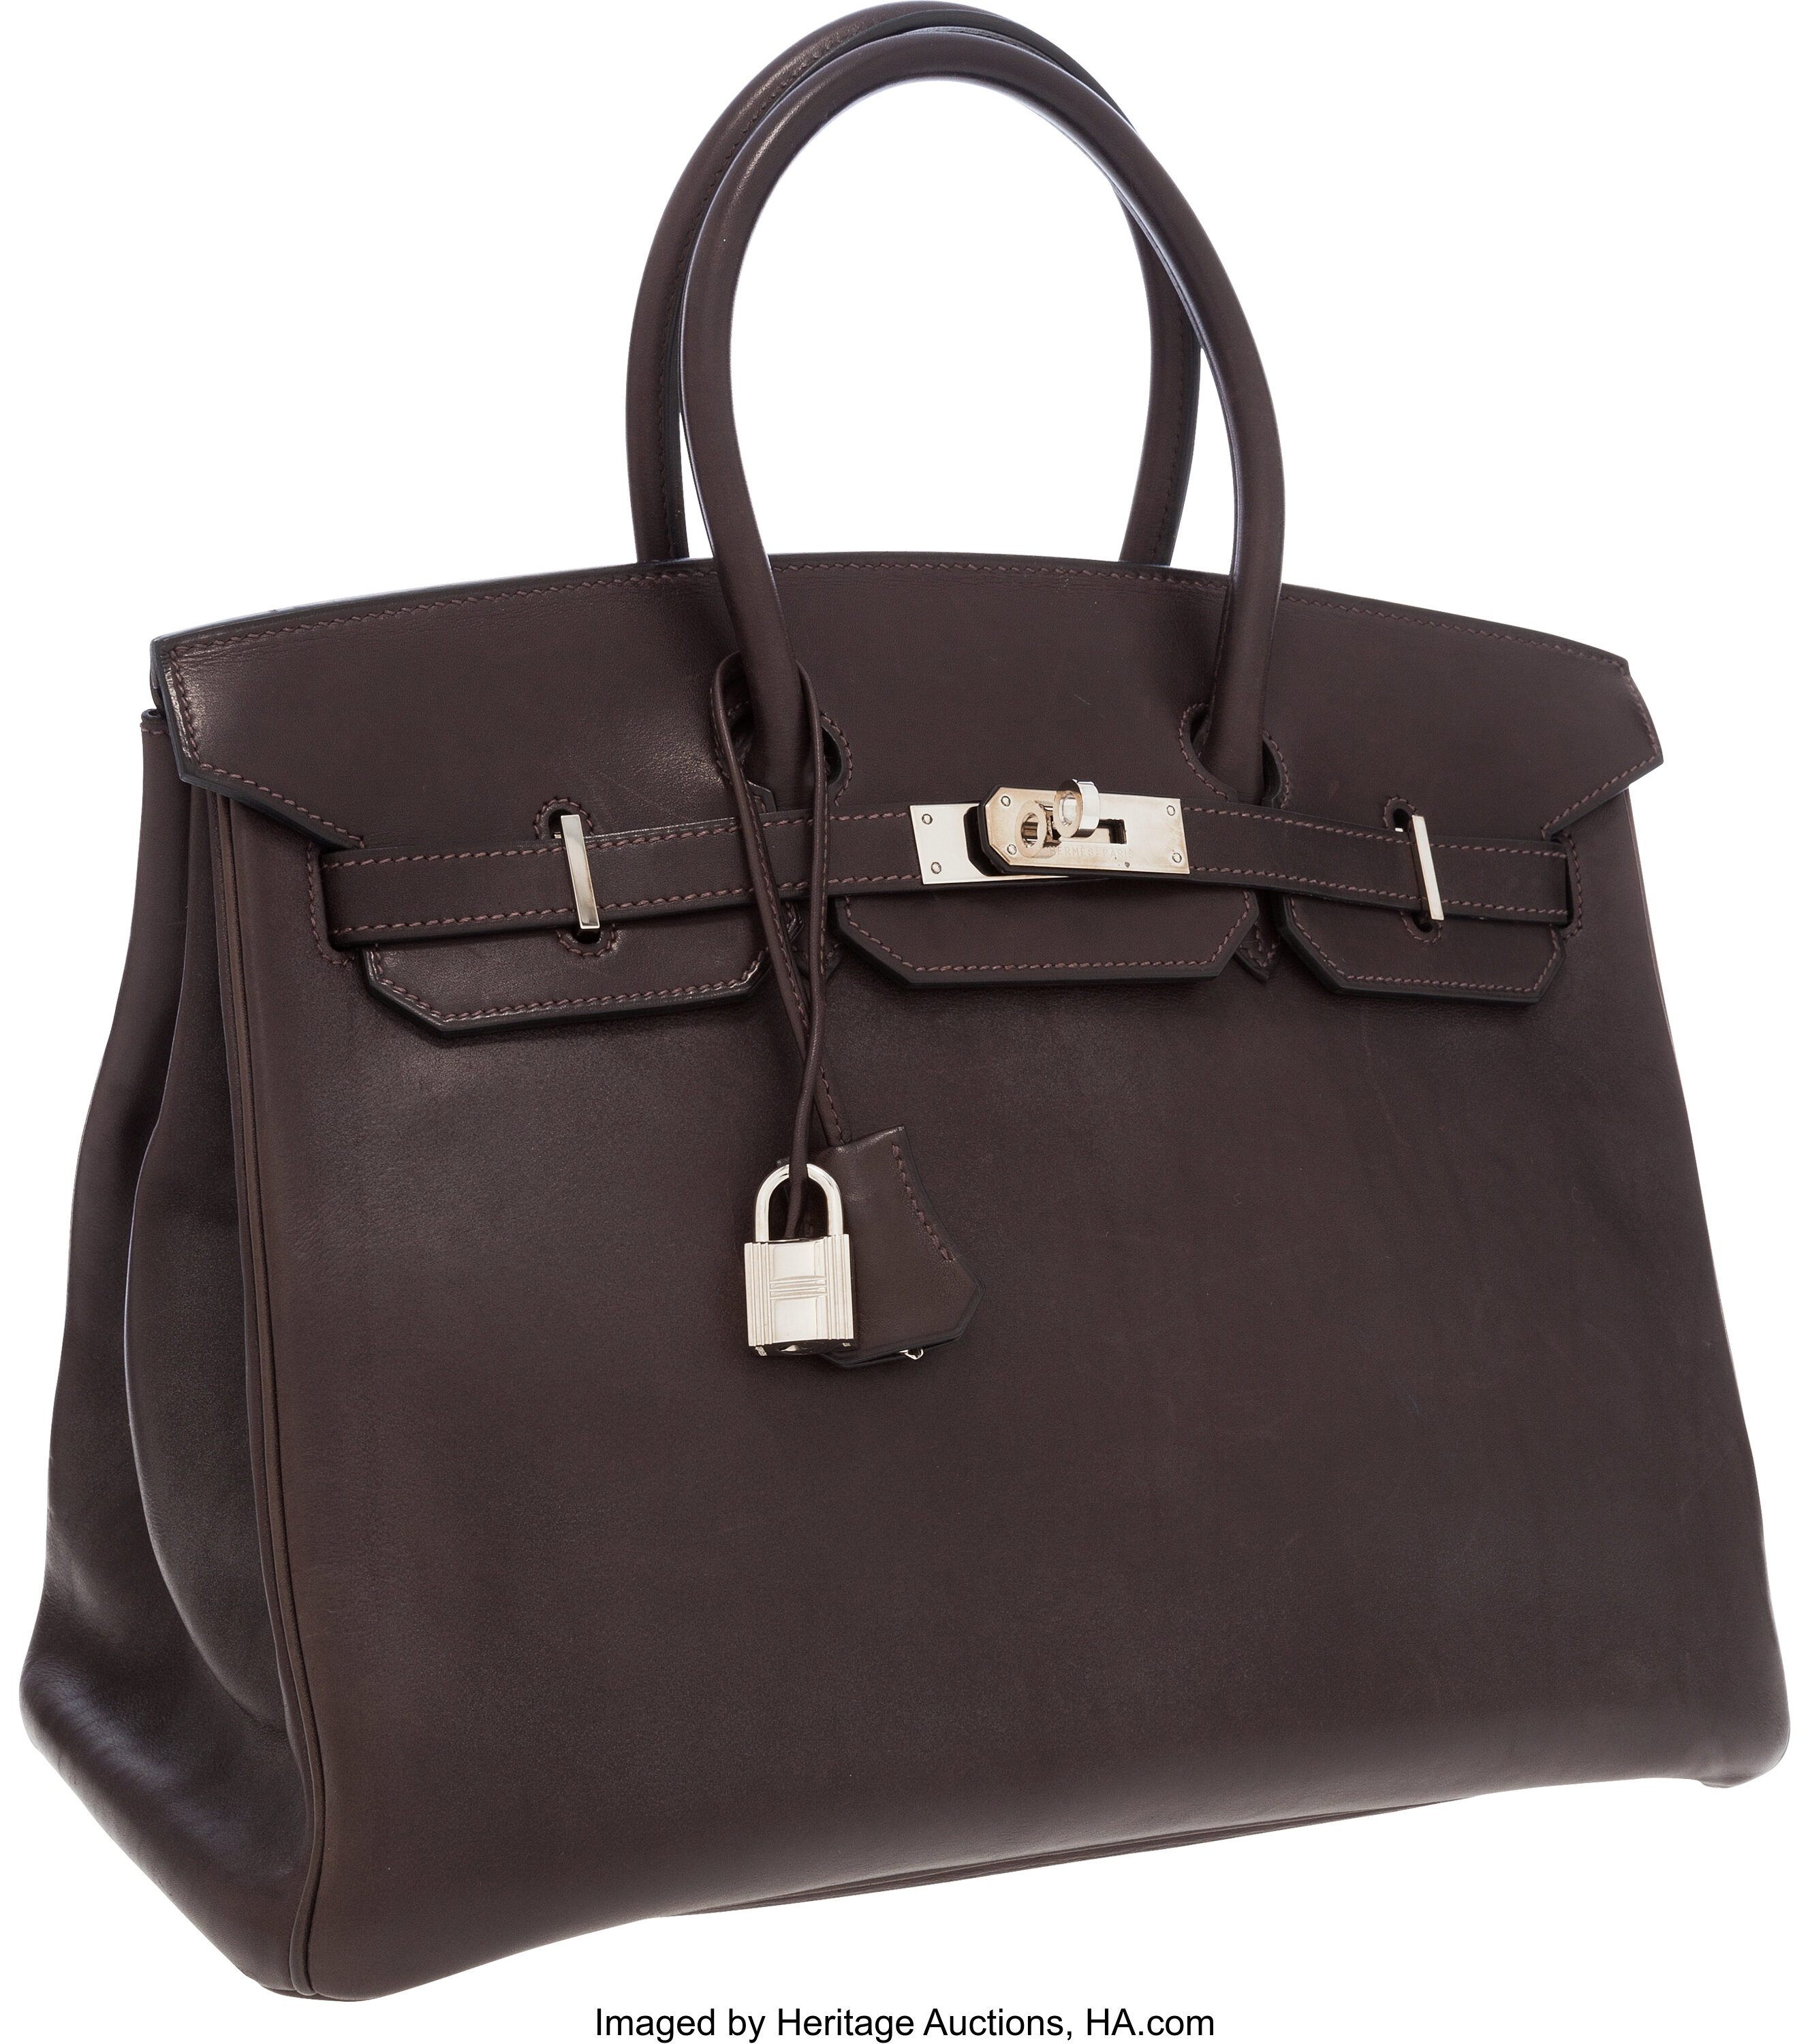 Hermes 35cm Ebene Barenia Leather Birkin Bag with Palladium